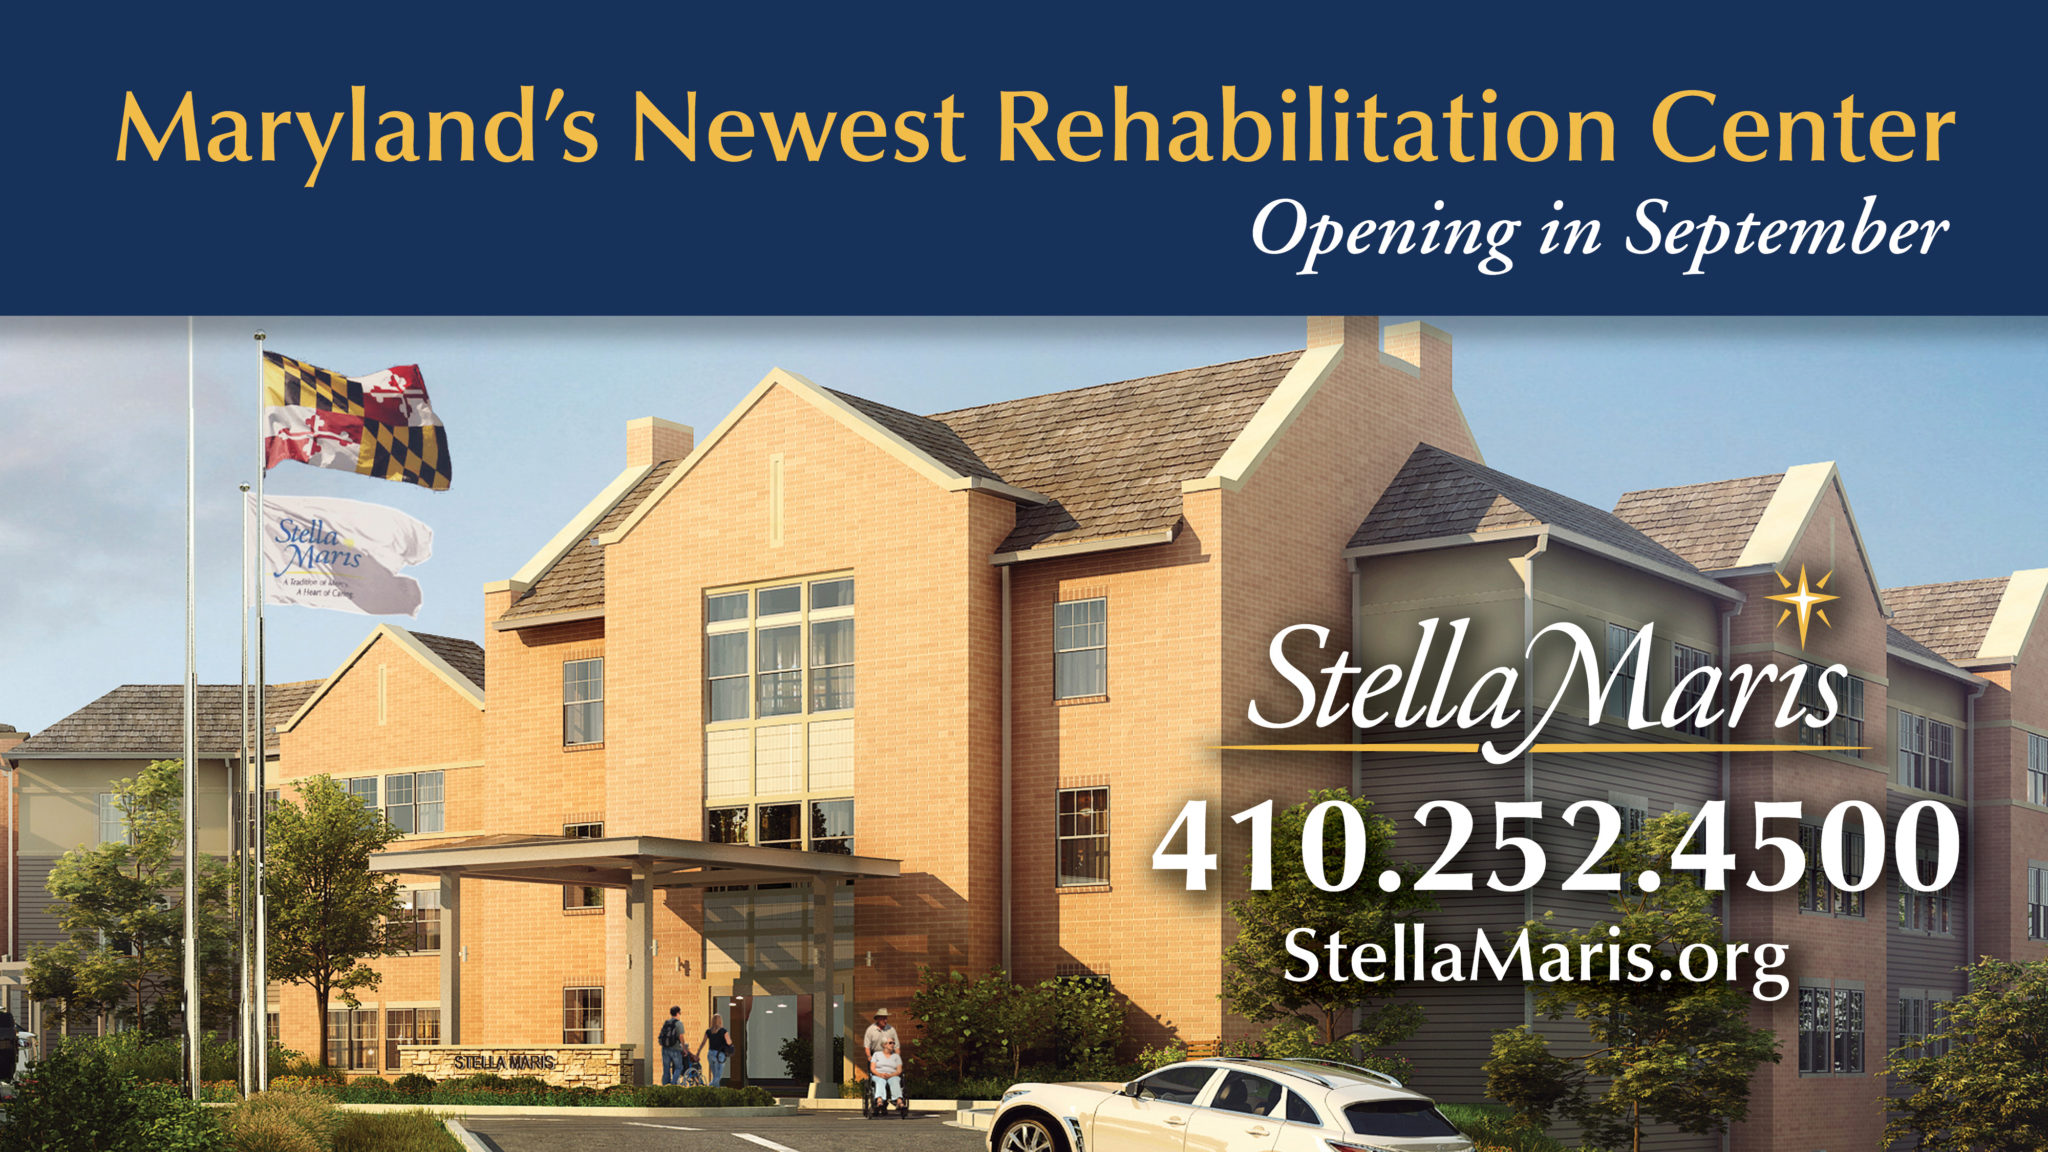 Introducing Marylands Newest Rehabilitation Center Stella Maris Nursing Home And Skilled